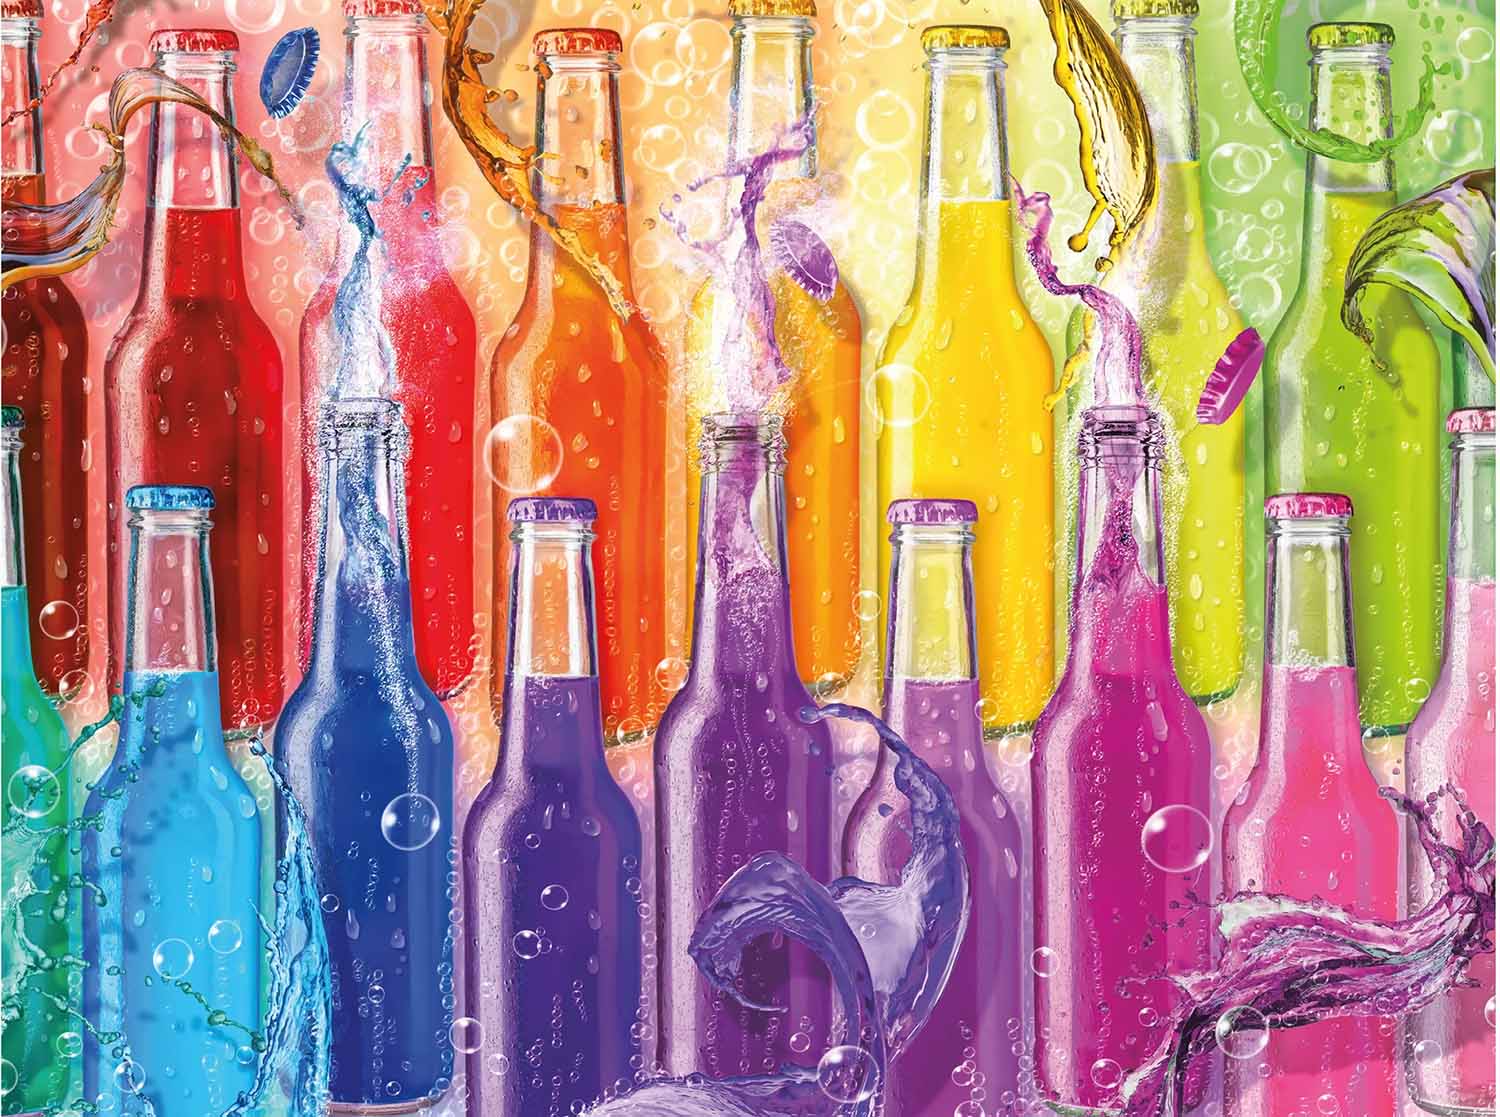 Colorstory - Soda Pop Rainbow Rainbow & Gradient Jigsaw Puzzle